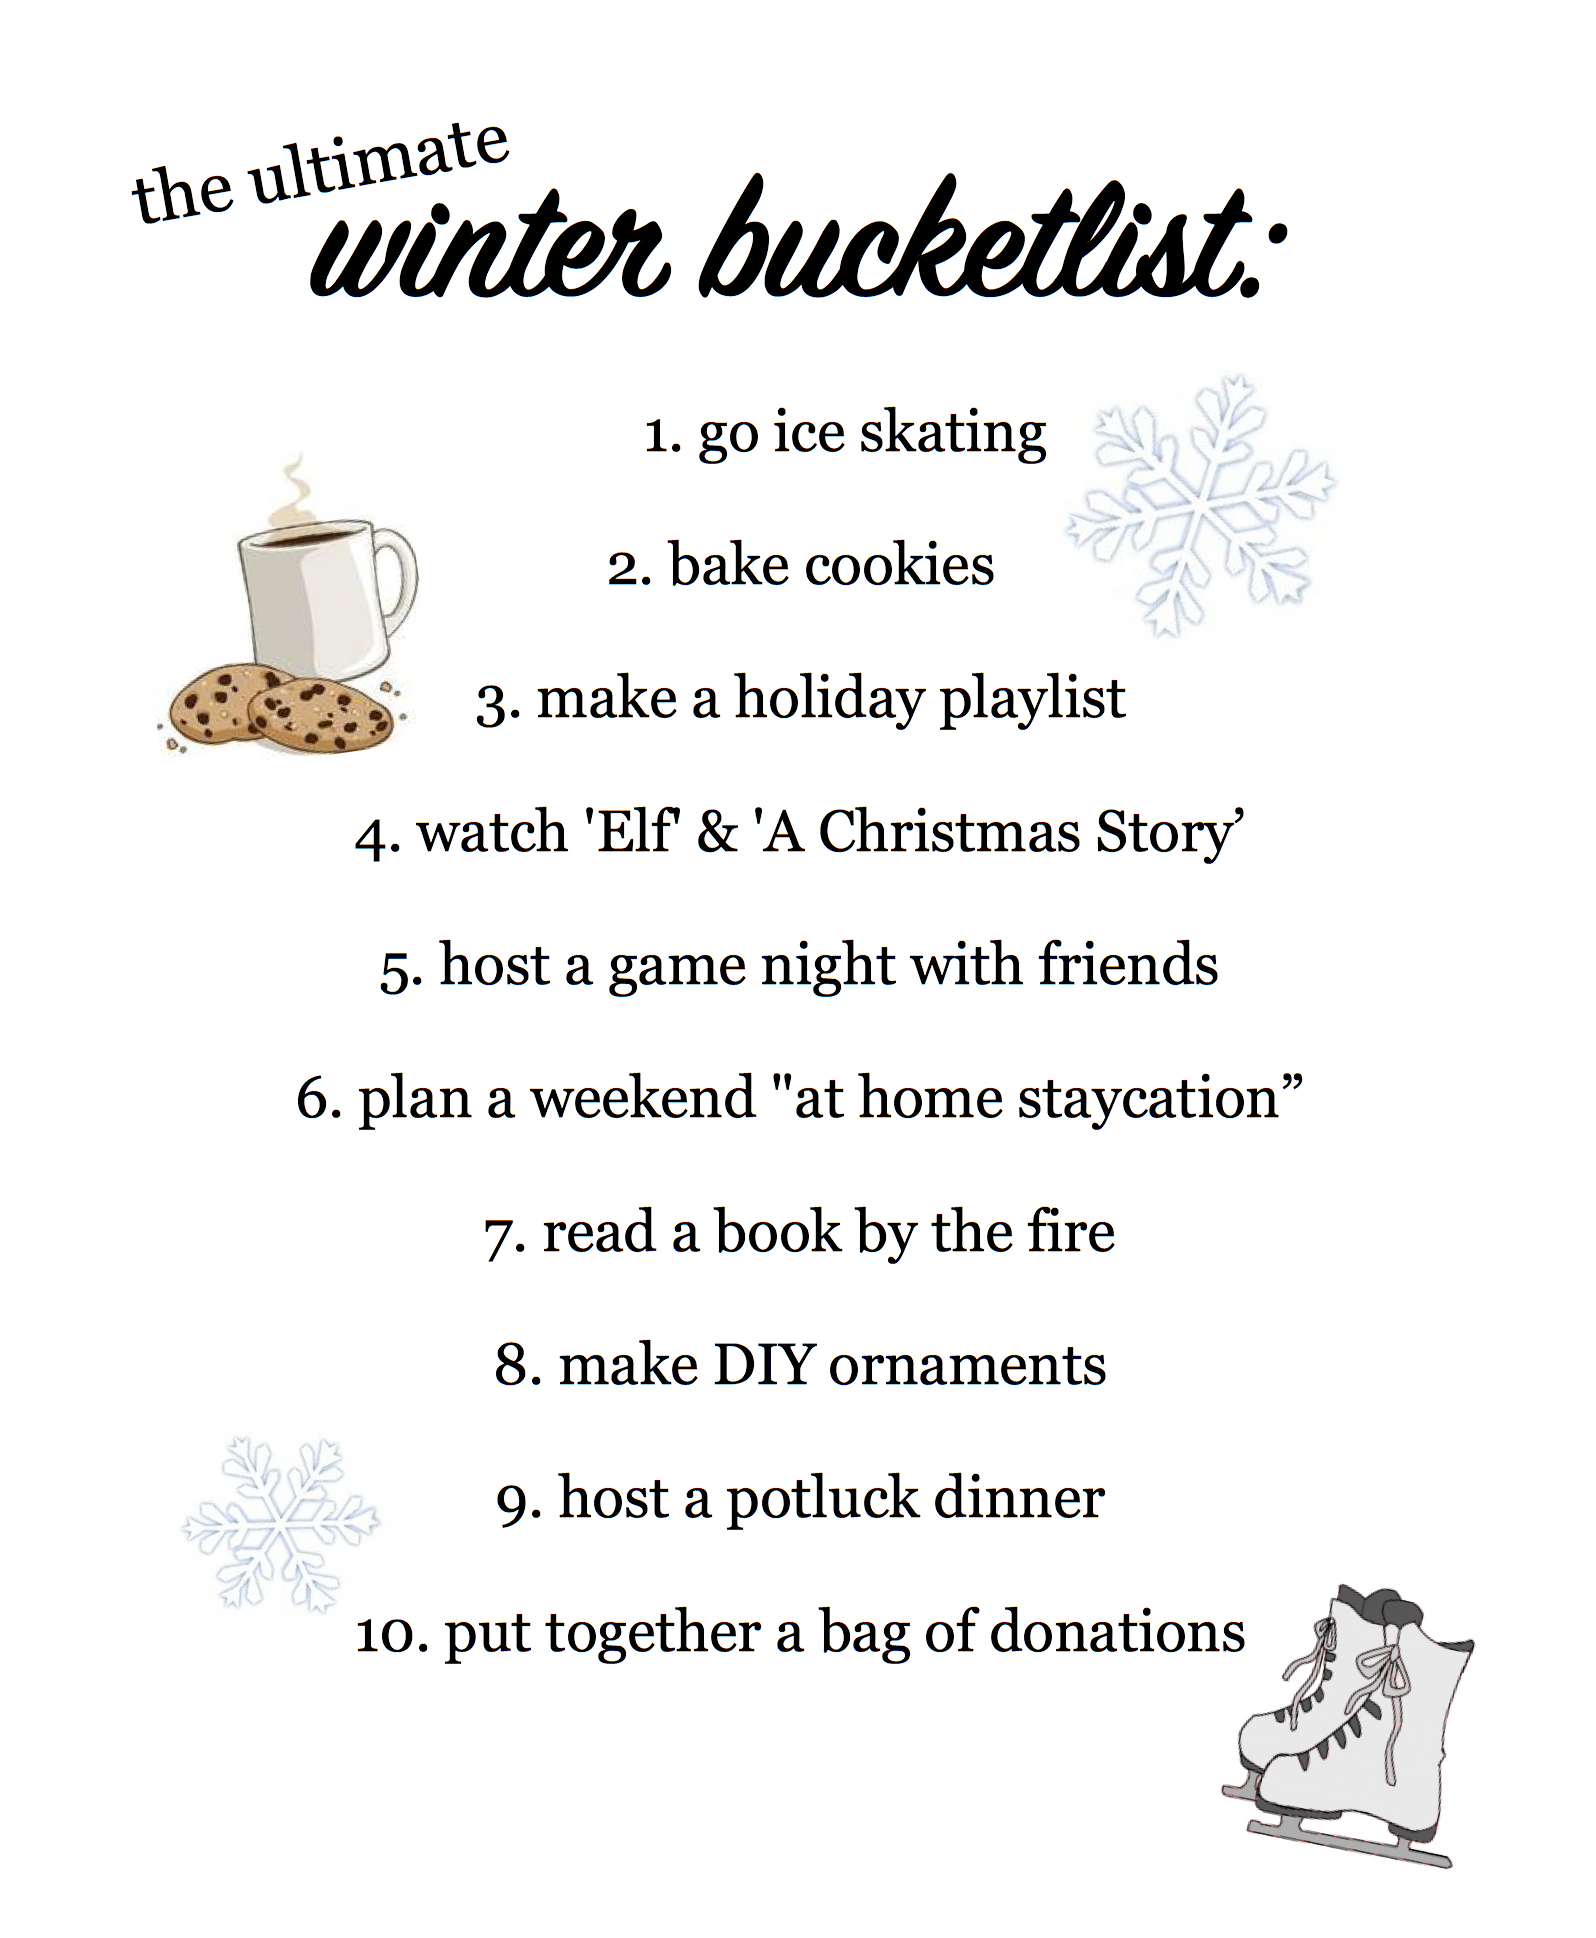 The Ultimate Winter Bucketlist